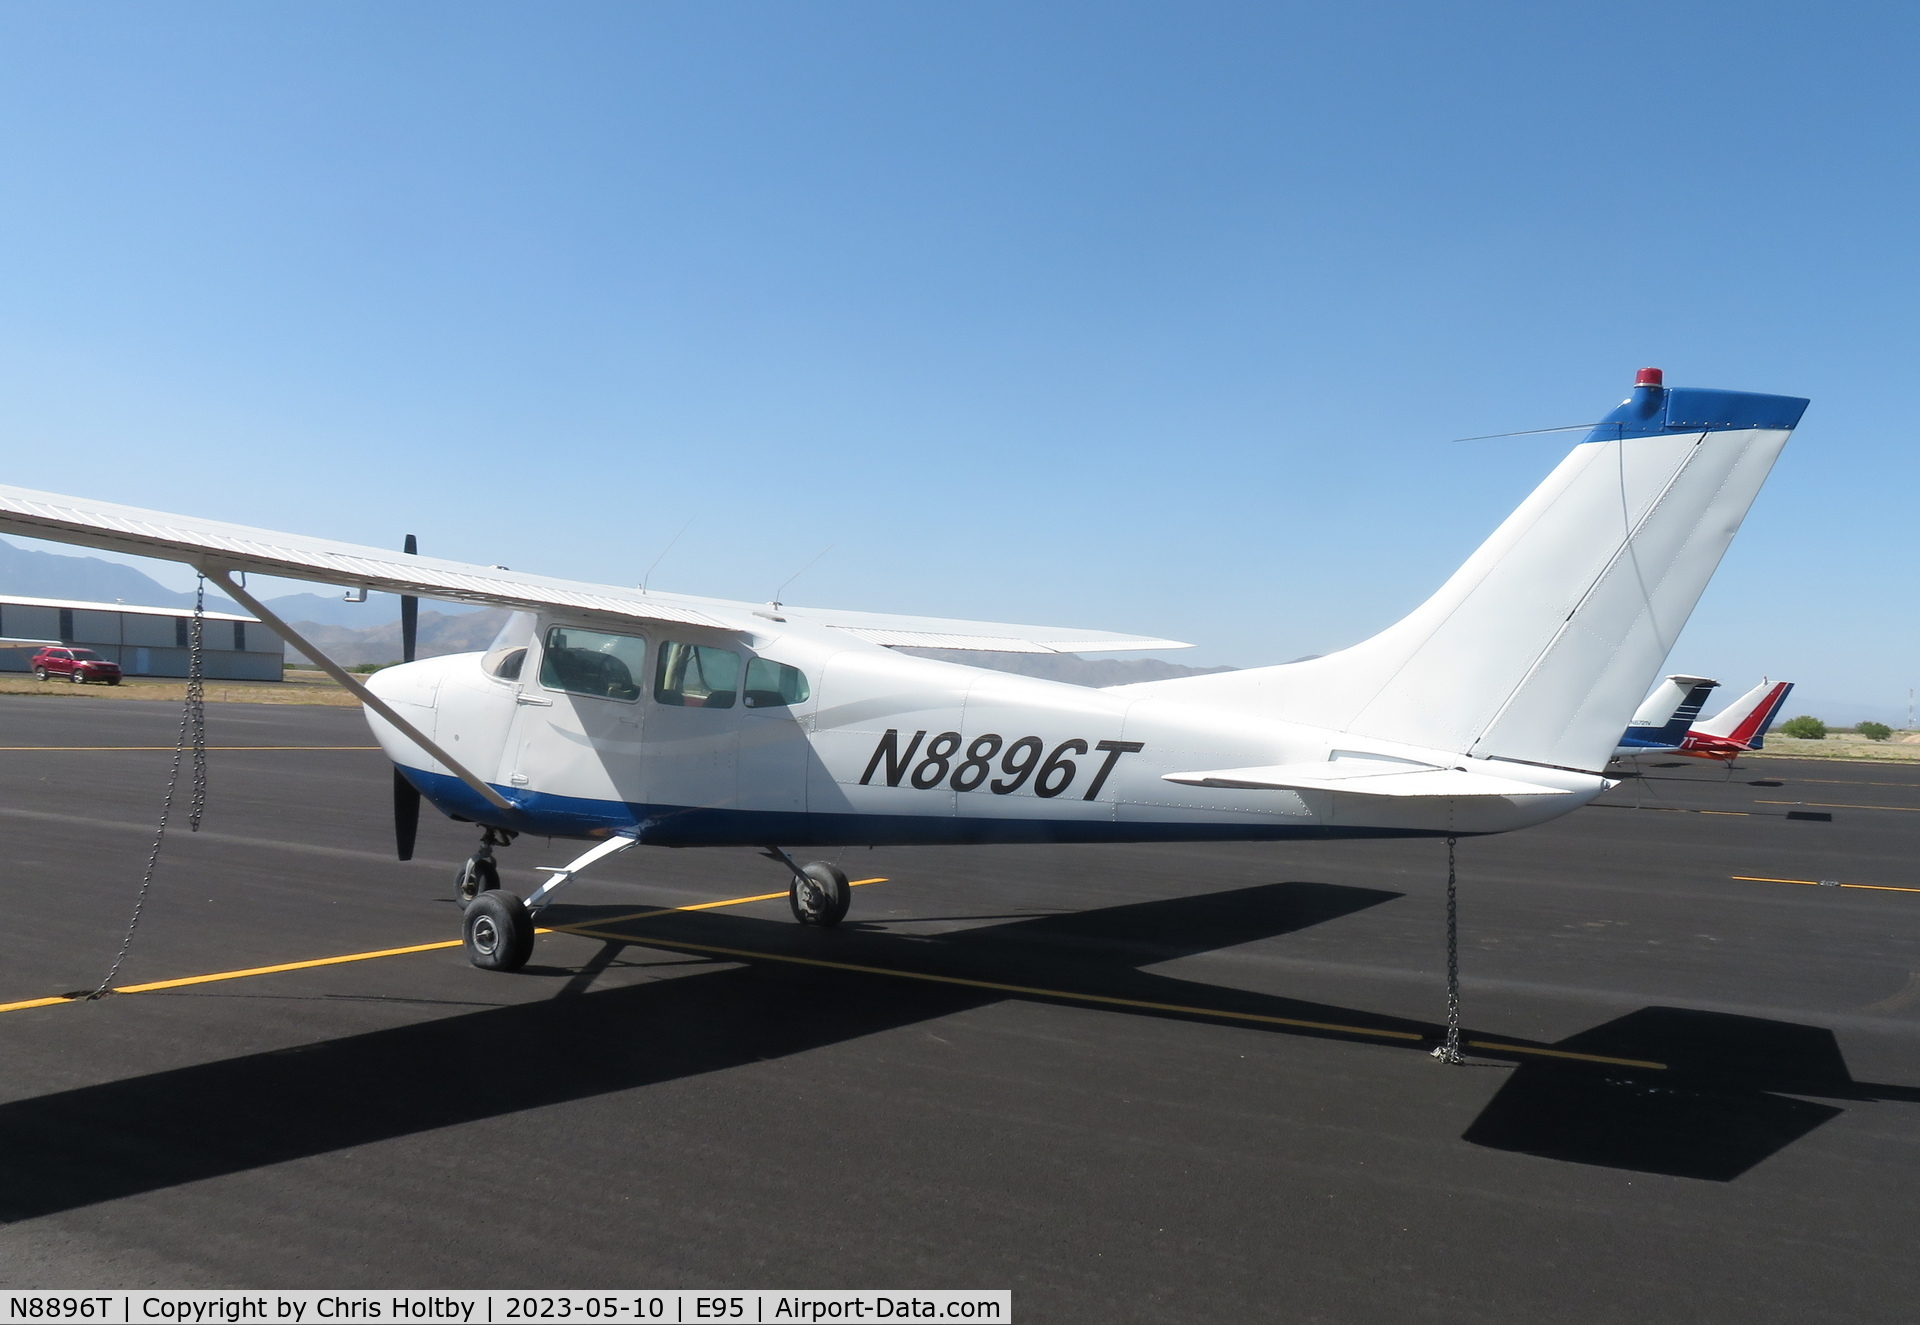 N8896T, 1960 Cessna 182C Skylane C/N 52796, Parked at Benson Municipal Airport, Arizona